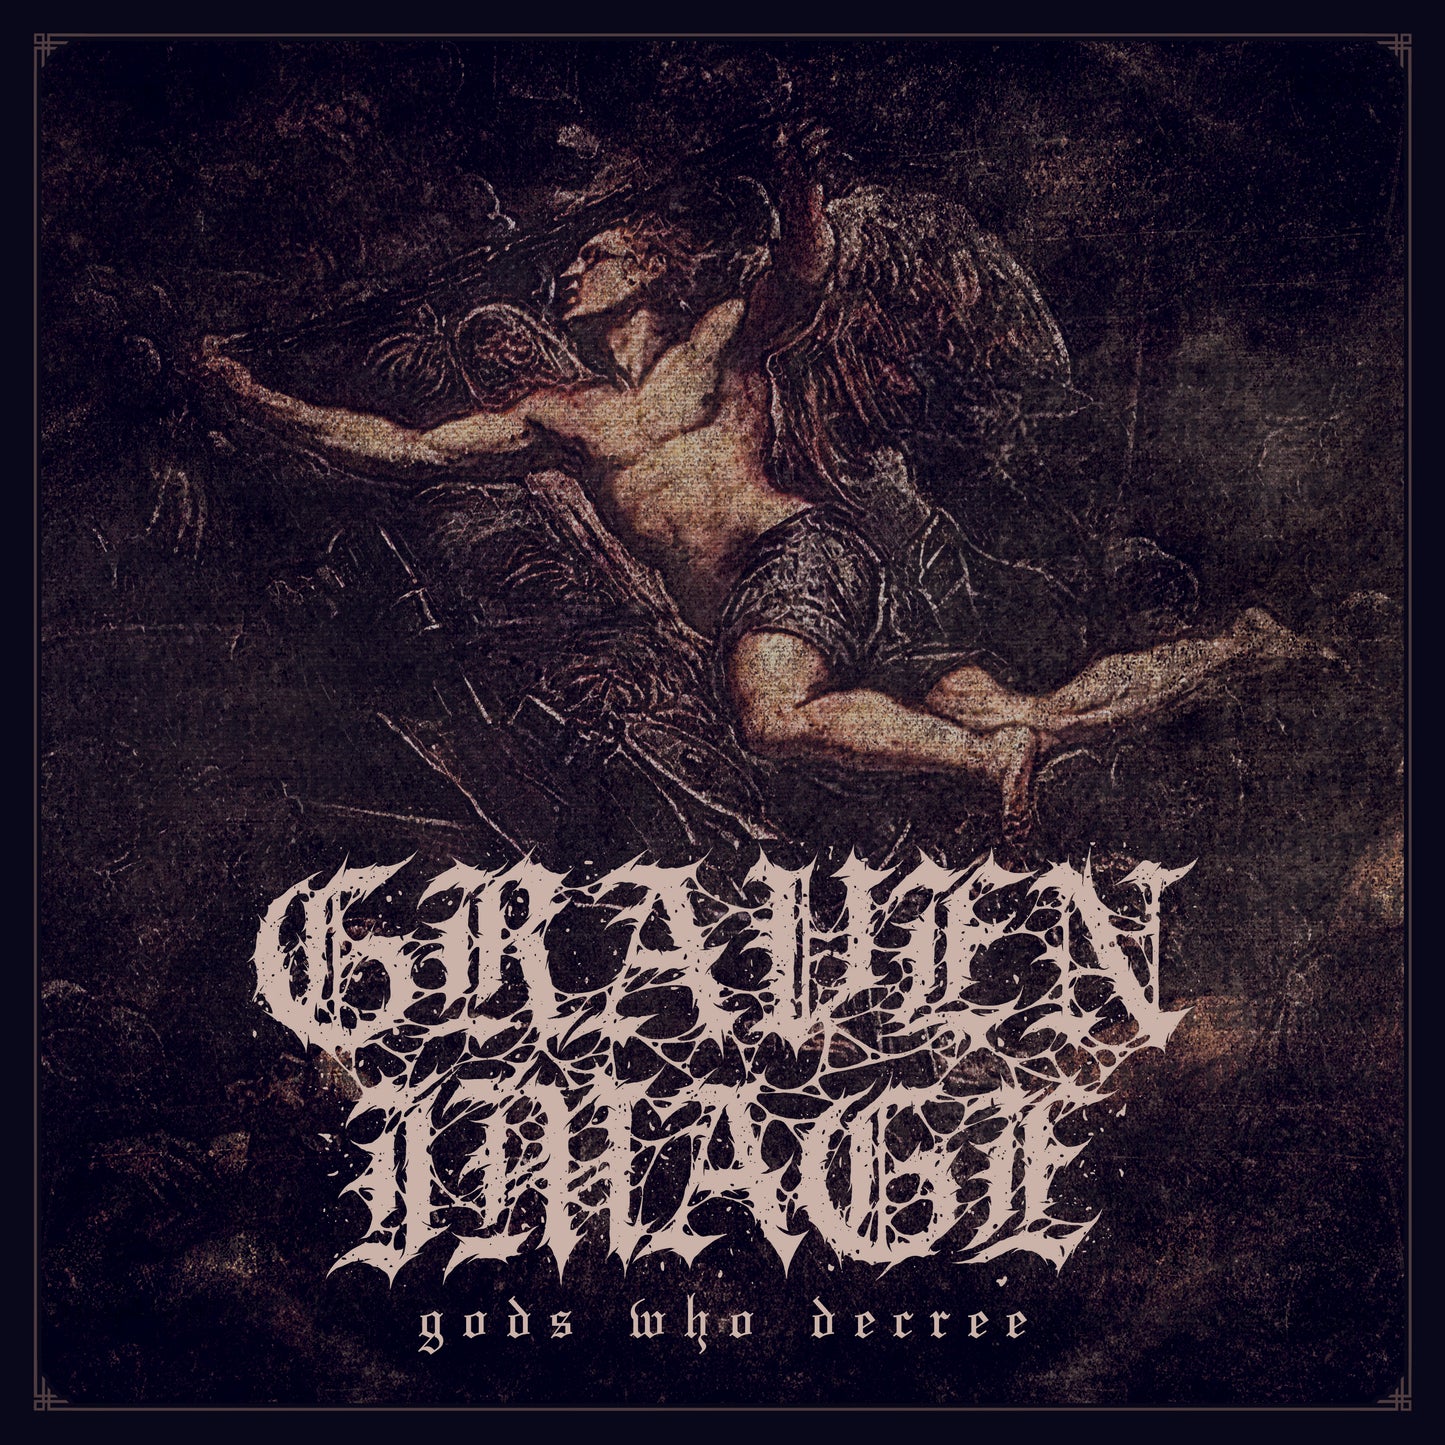 Graven Image - Gods Who Decree